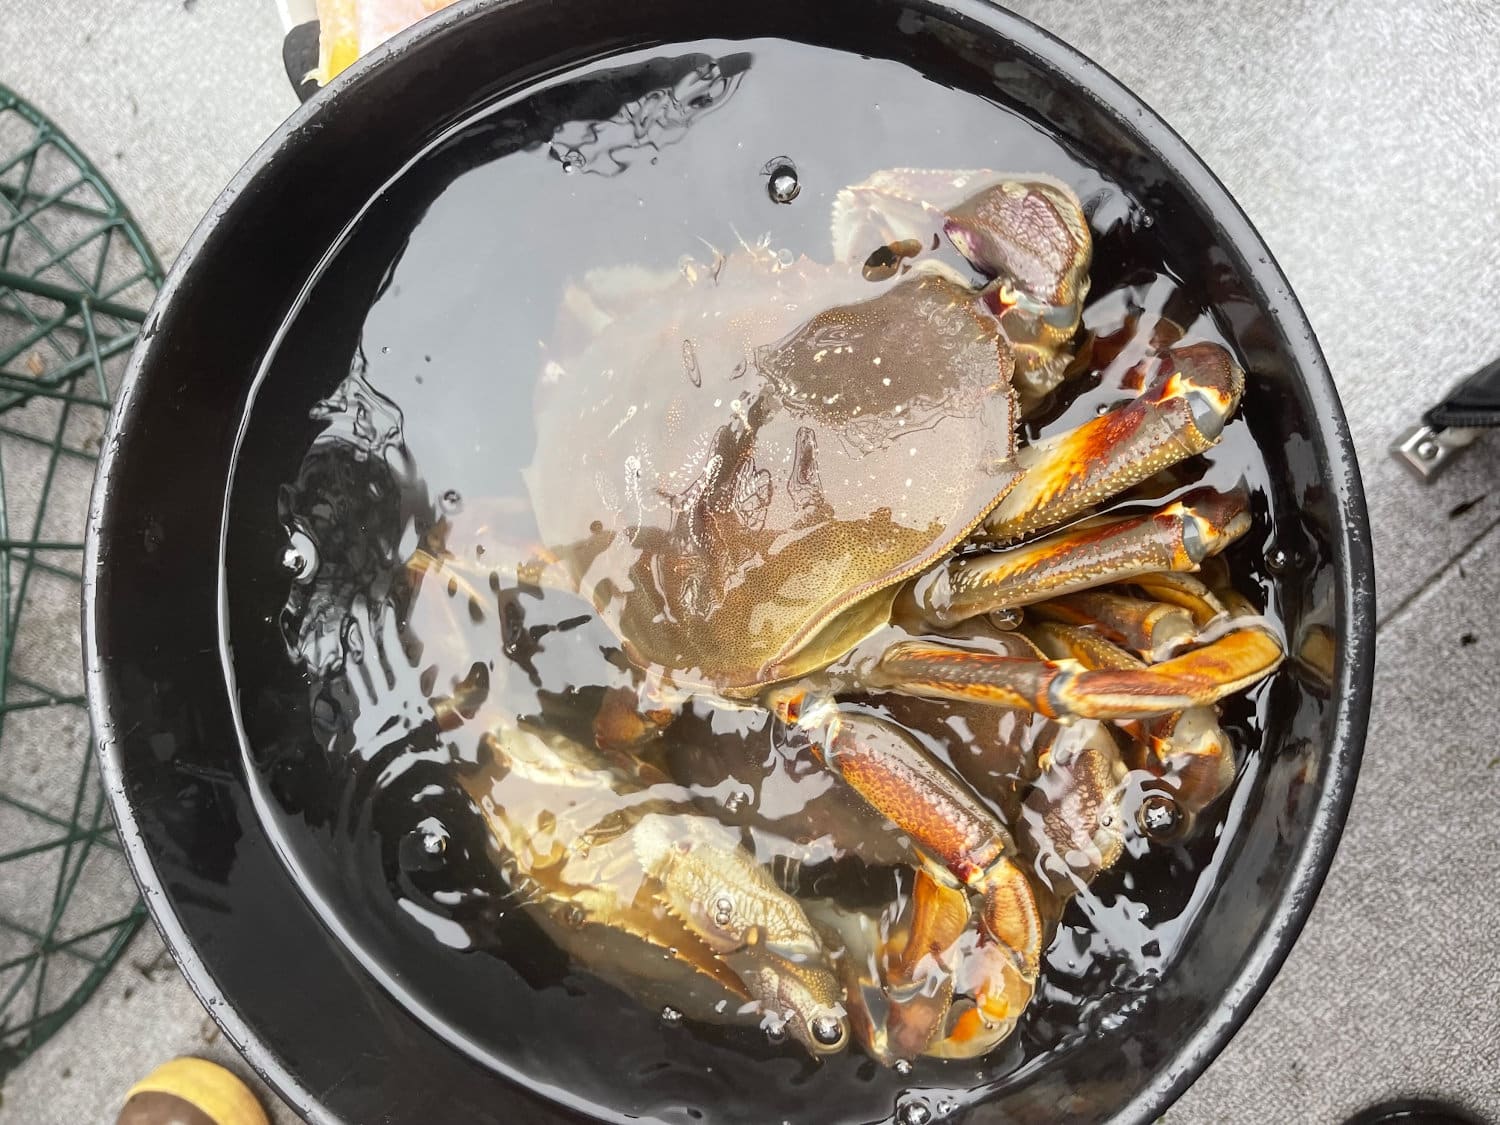 https://thewildprovides.com/wp-content/uploads/2022/12/dungeness-crabs-in-bucket-1500.jpg